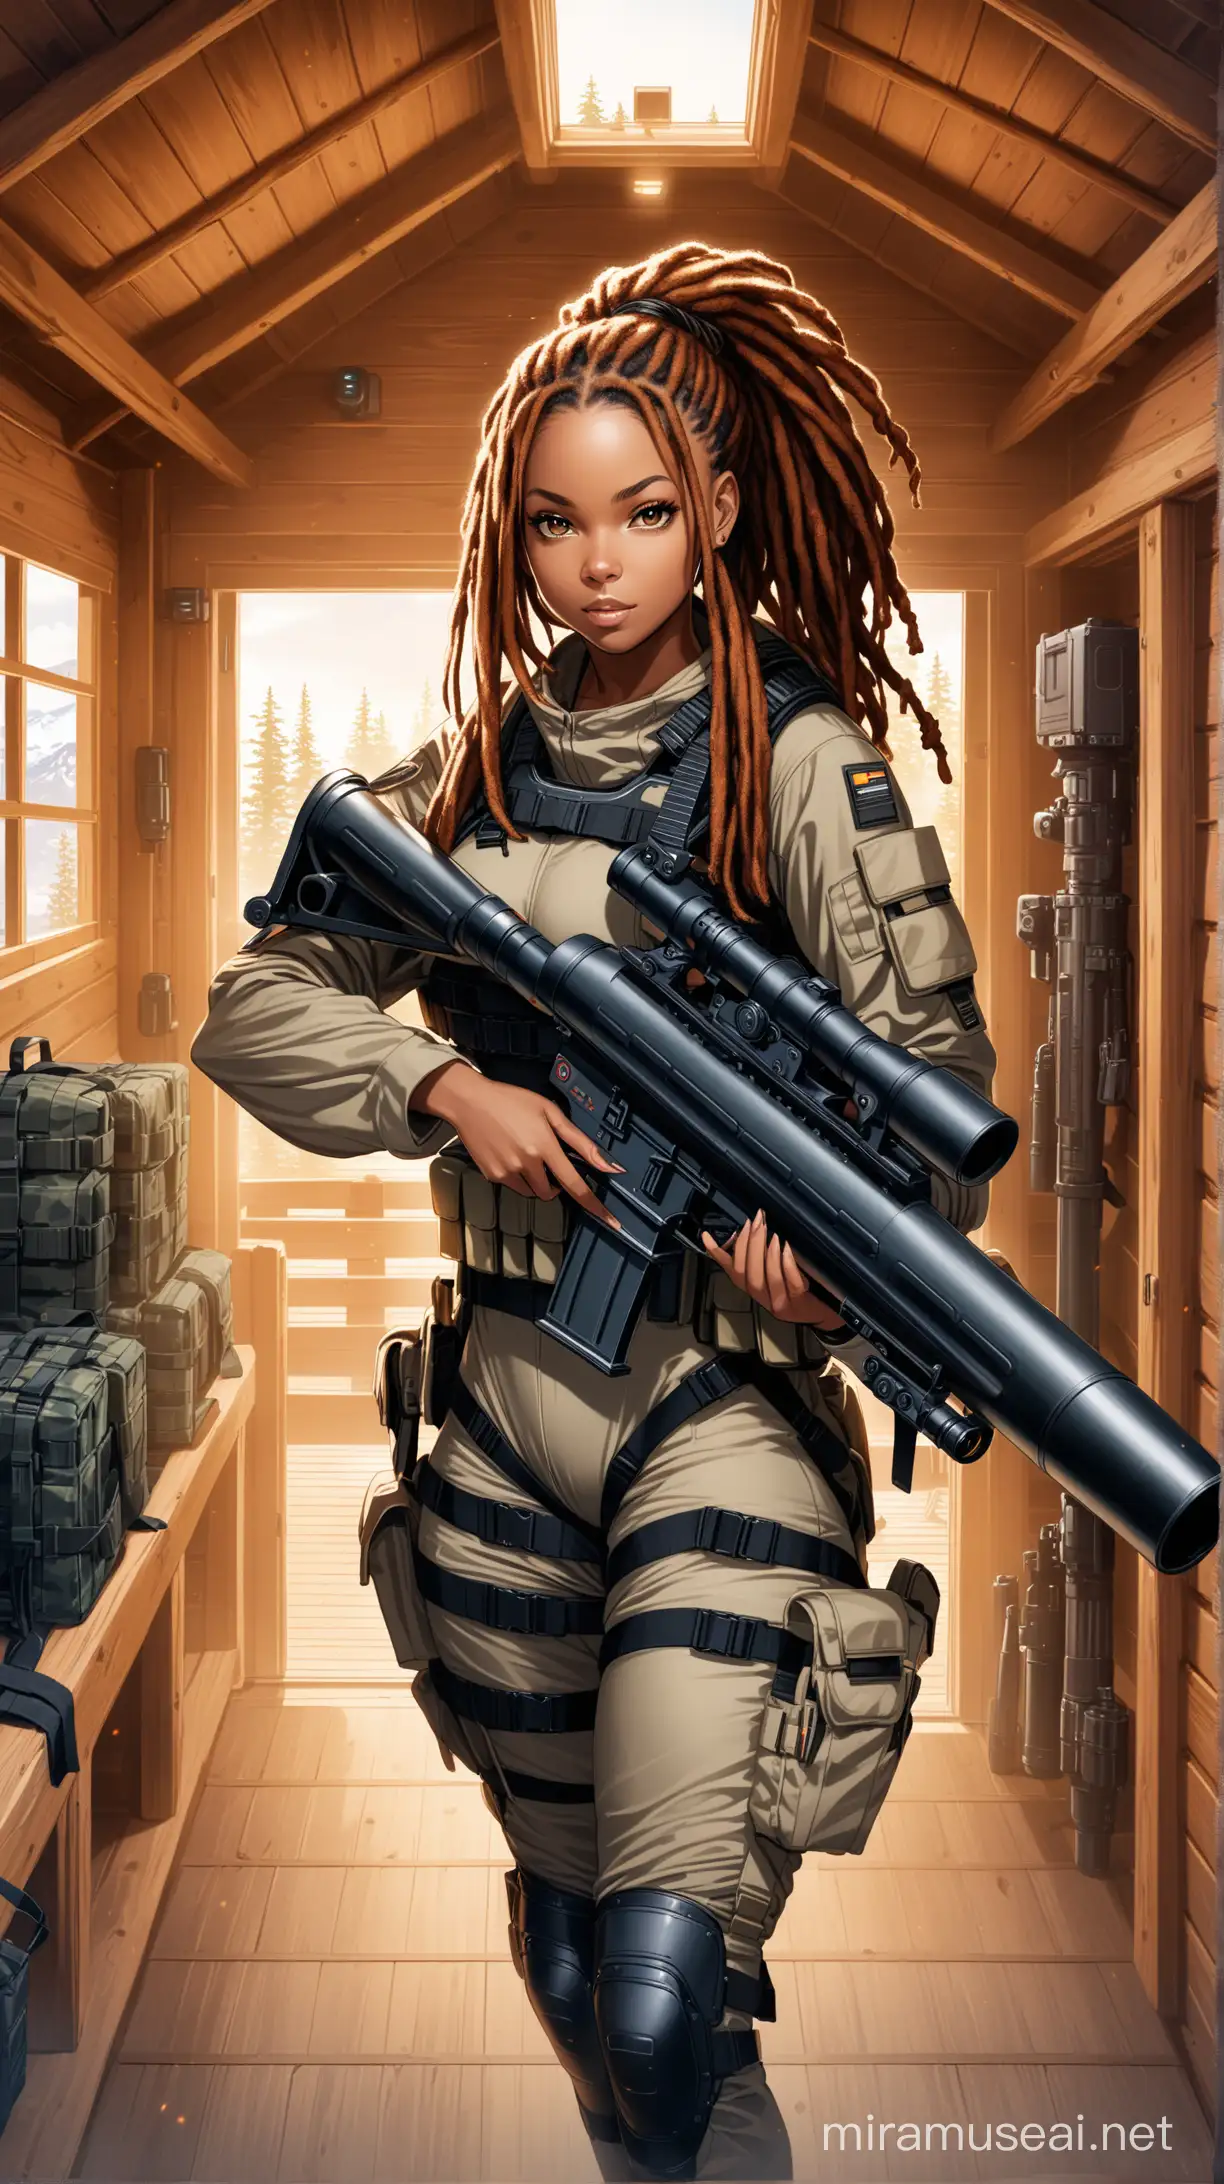 Beautiful black woman with dreadlocks wielding bazooka in combat gear in wooden cabin surrounded by high tech equipment.